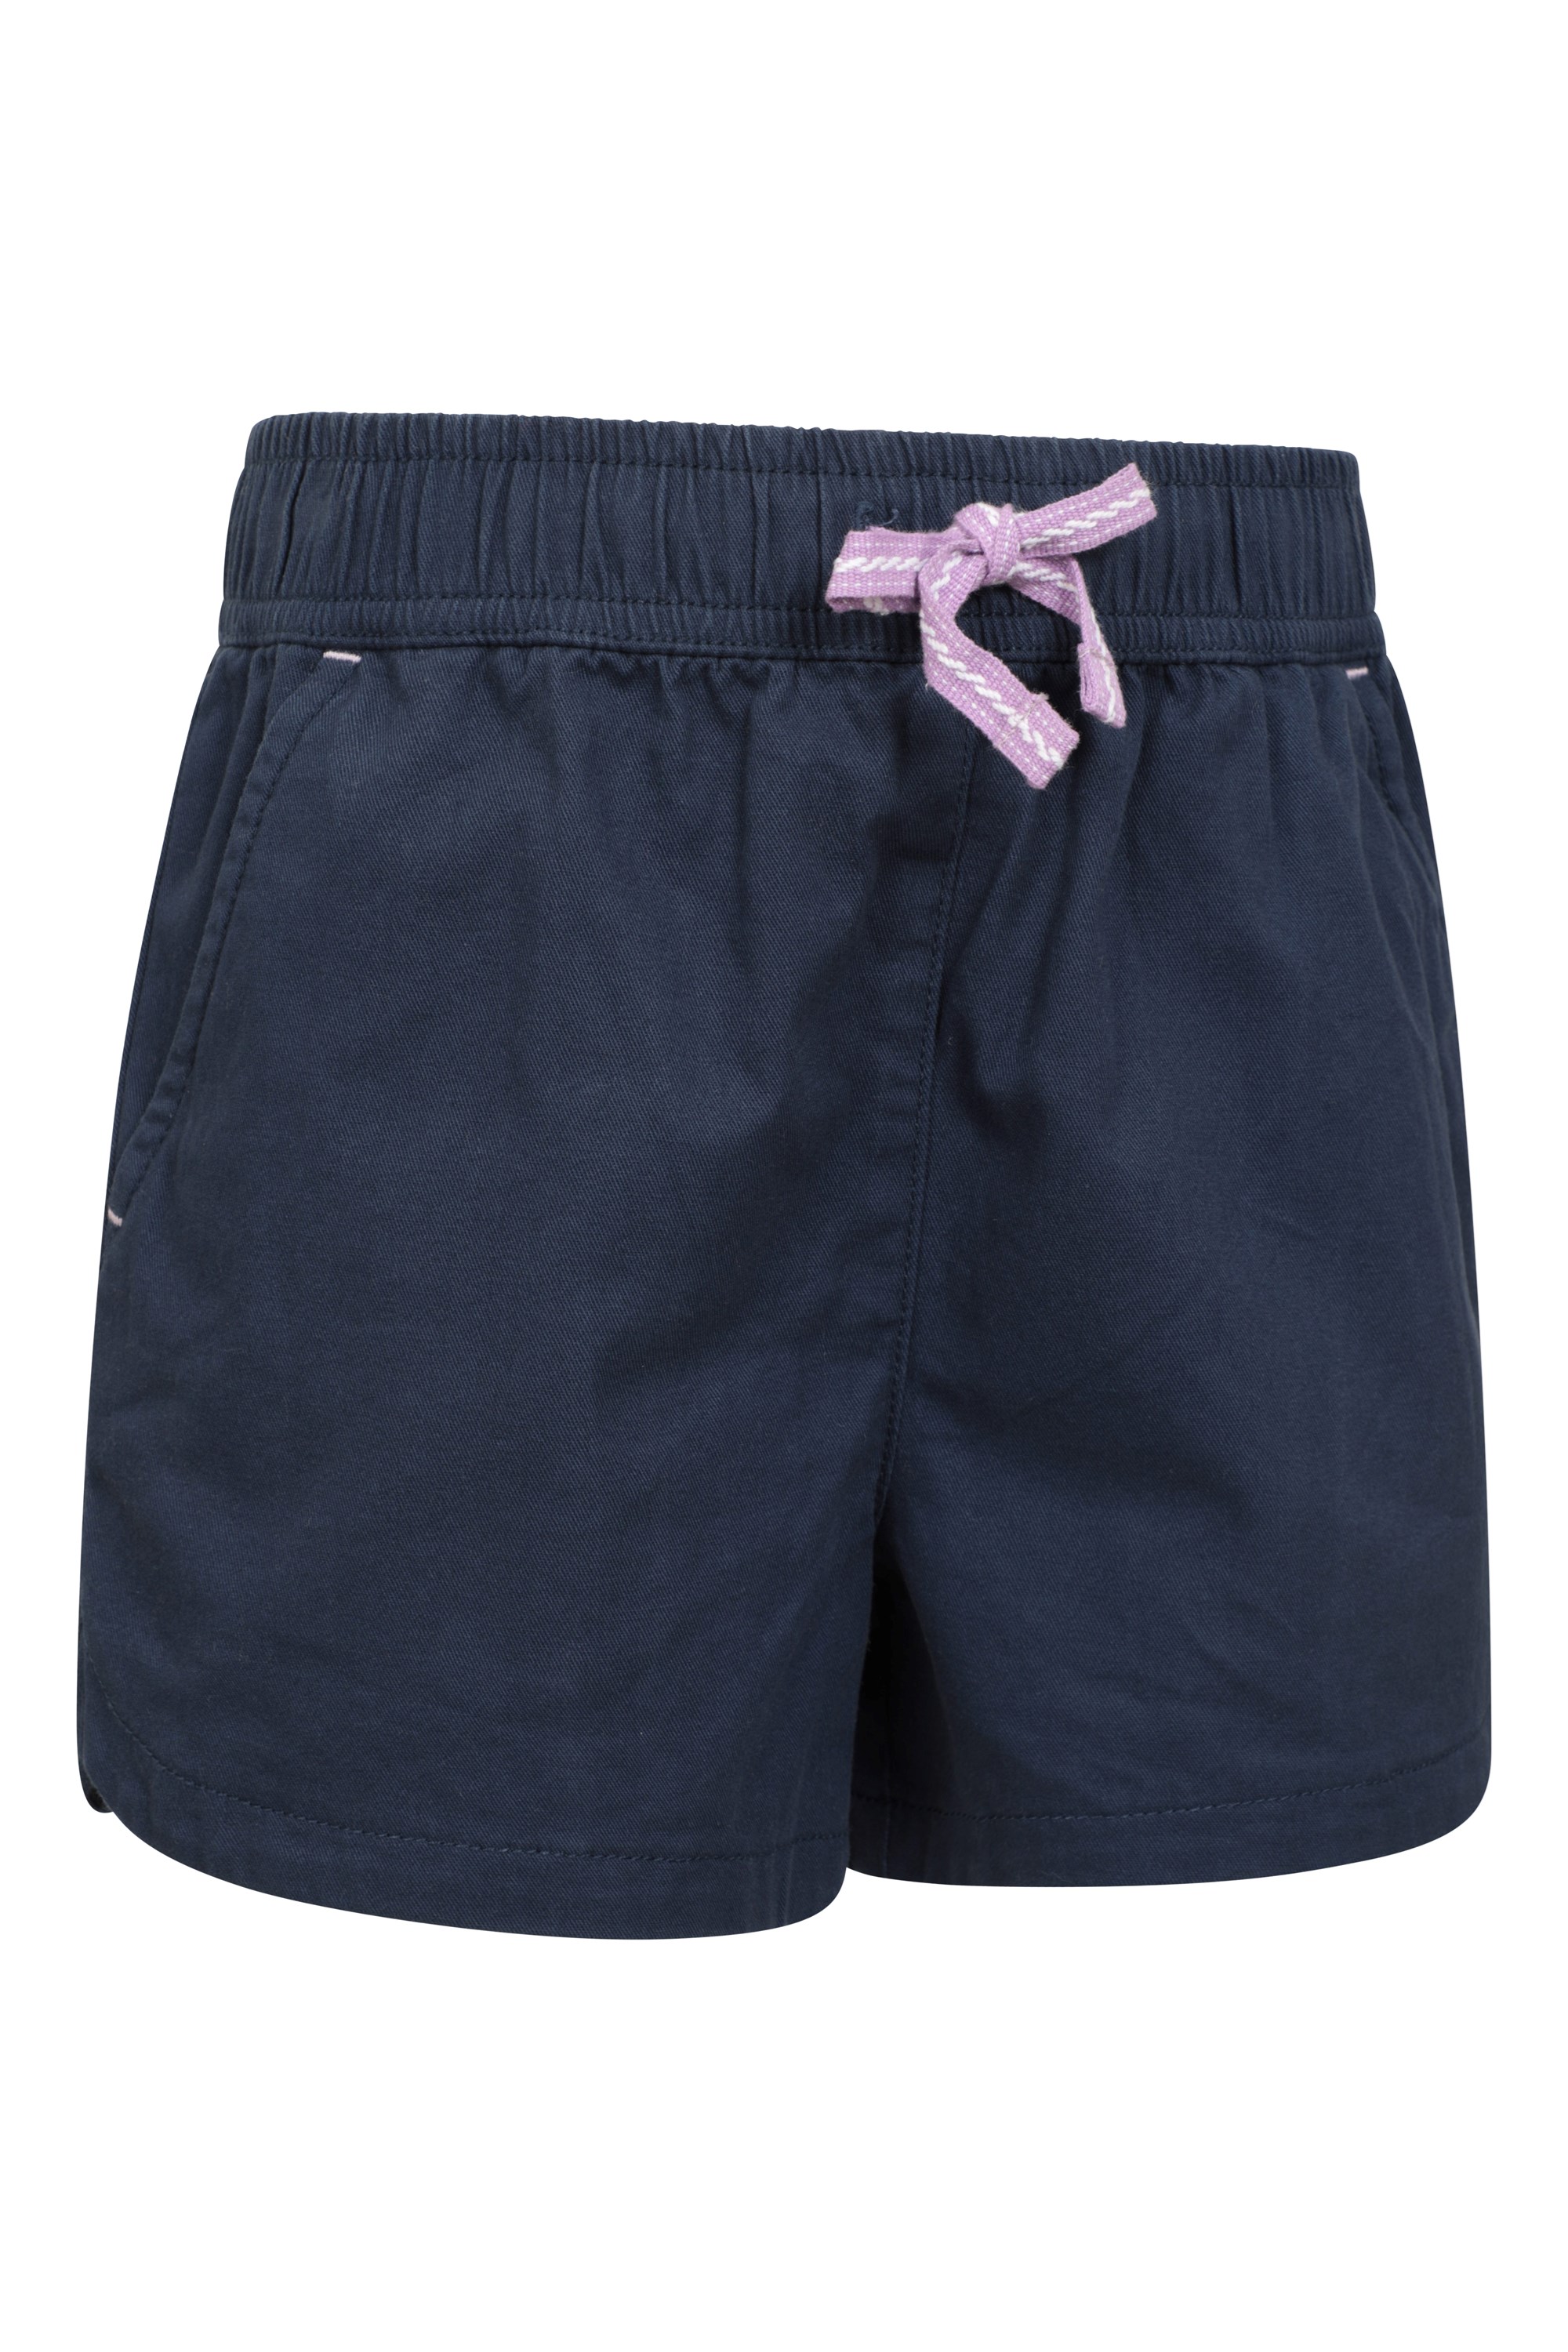 Mountain Warehouse Mountain Warehouse Kids Waterfall Shorts Cotton Elastic 2 Pack Summer Half Pants 